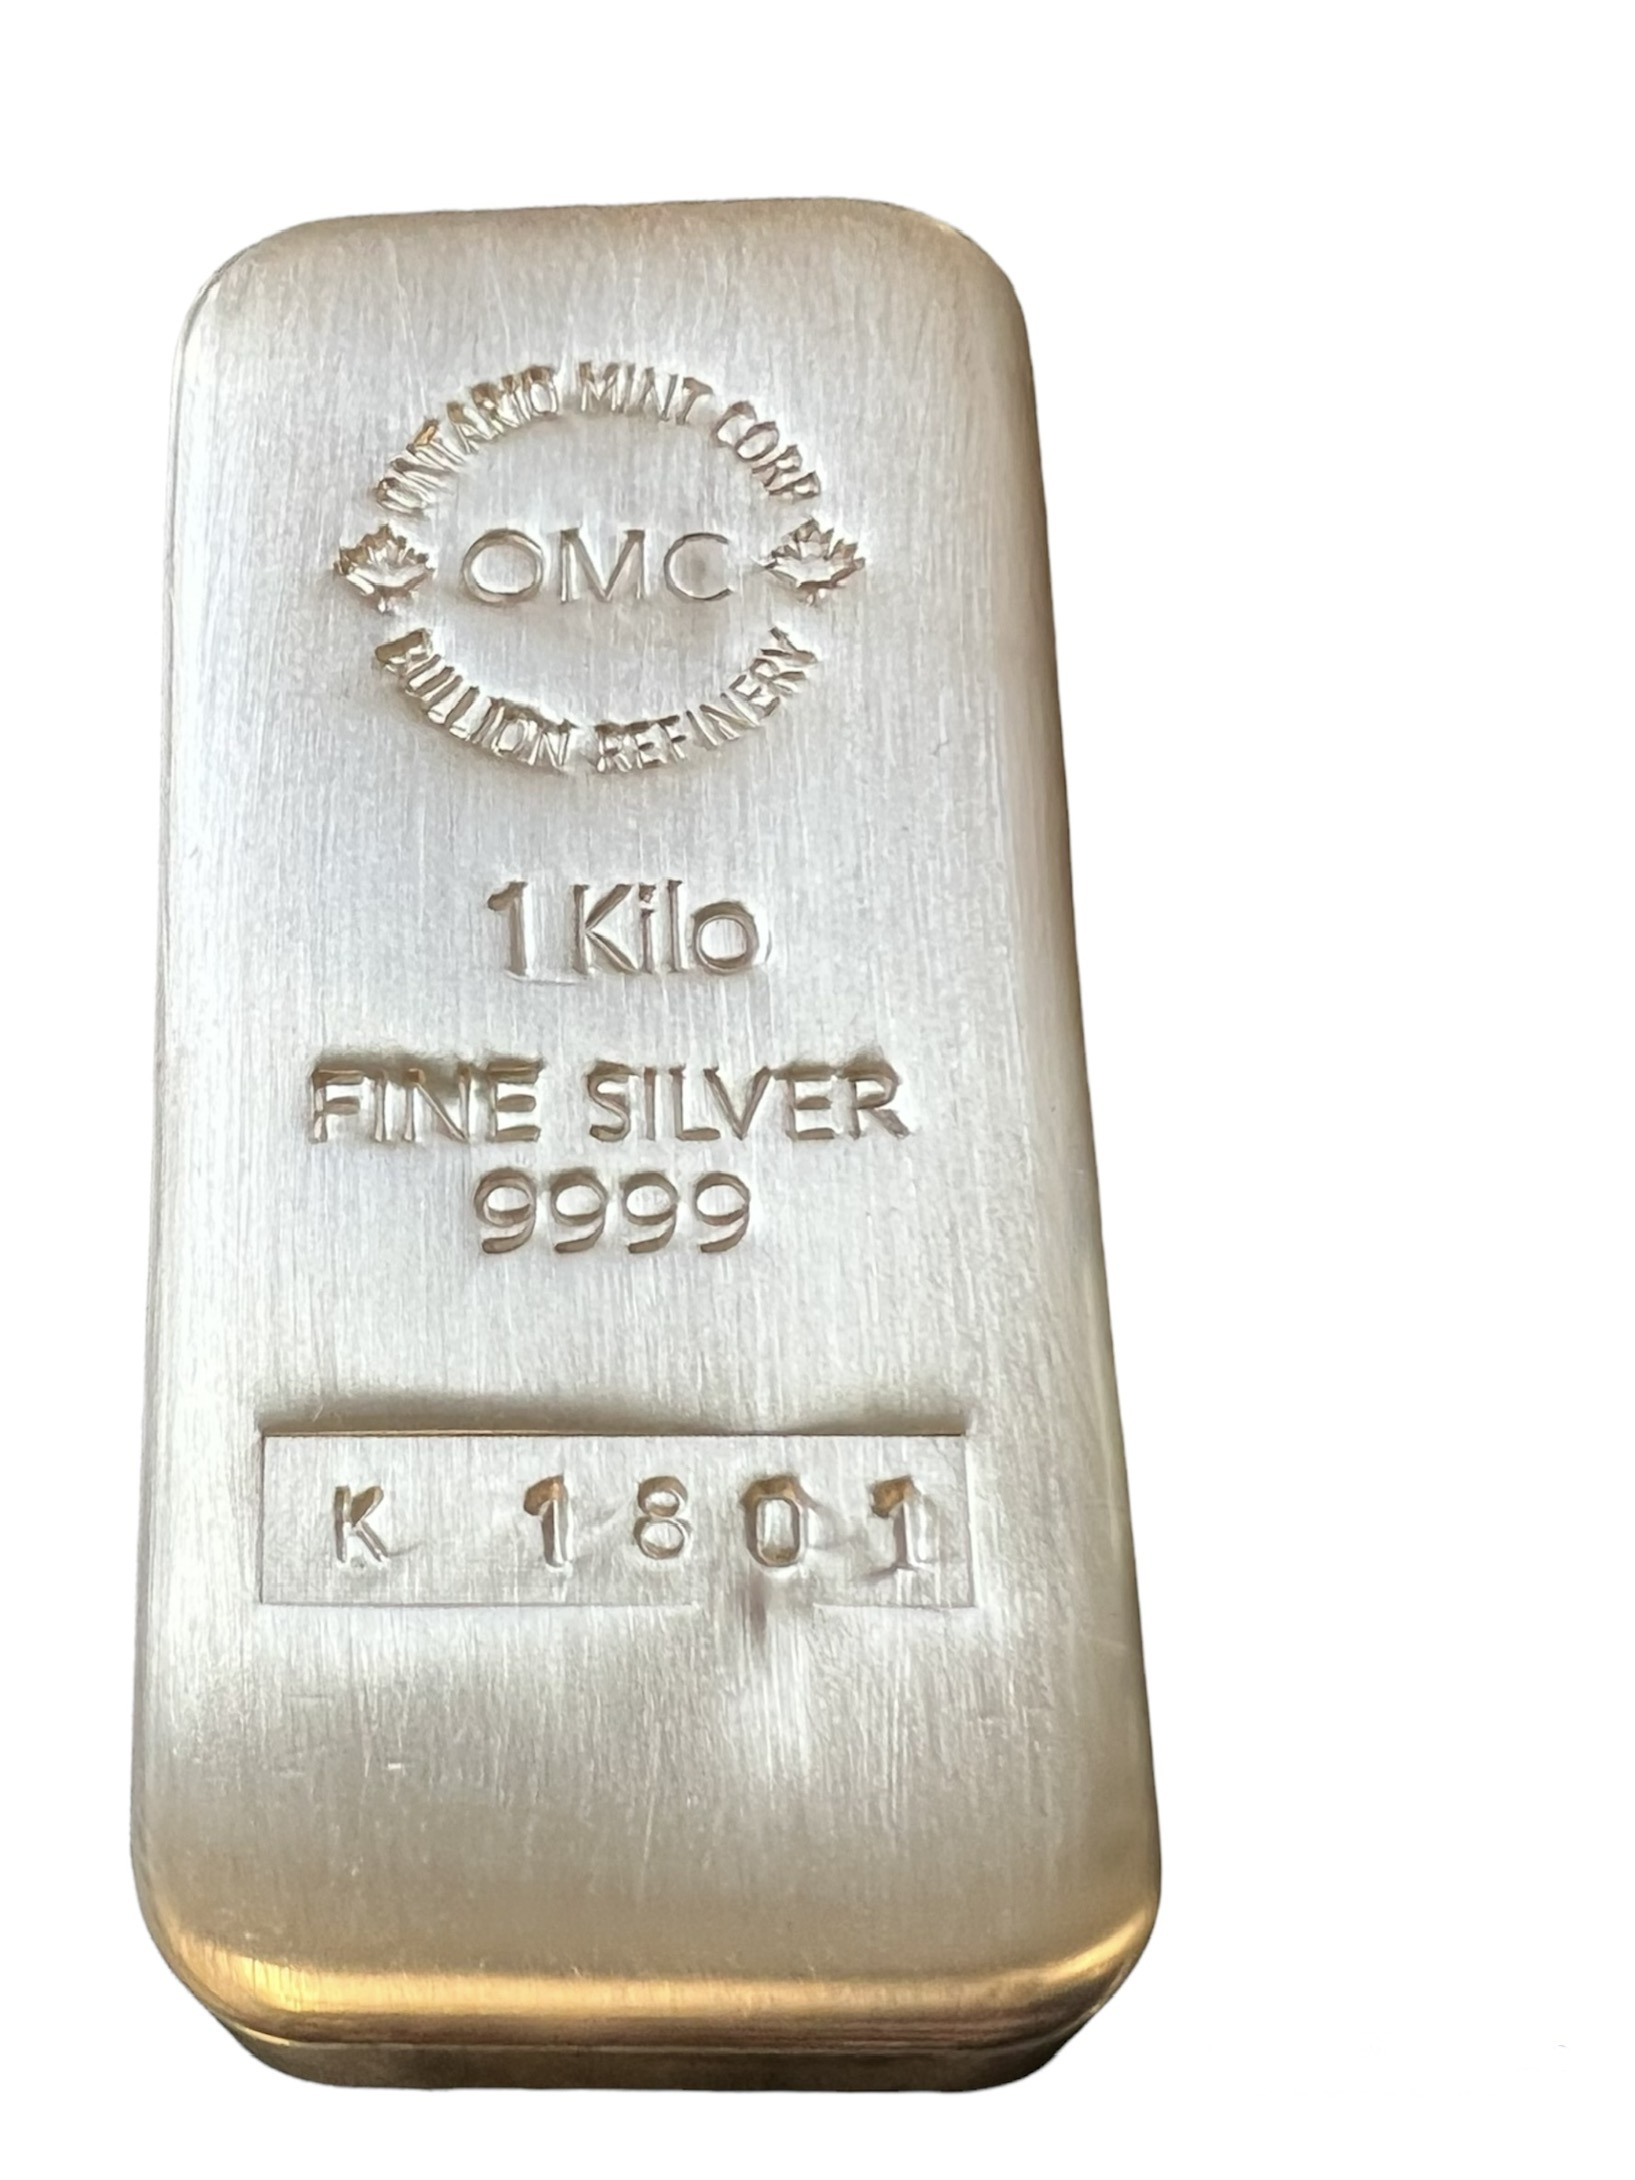 1 Kilo OMC Silver Bar (99.99%)